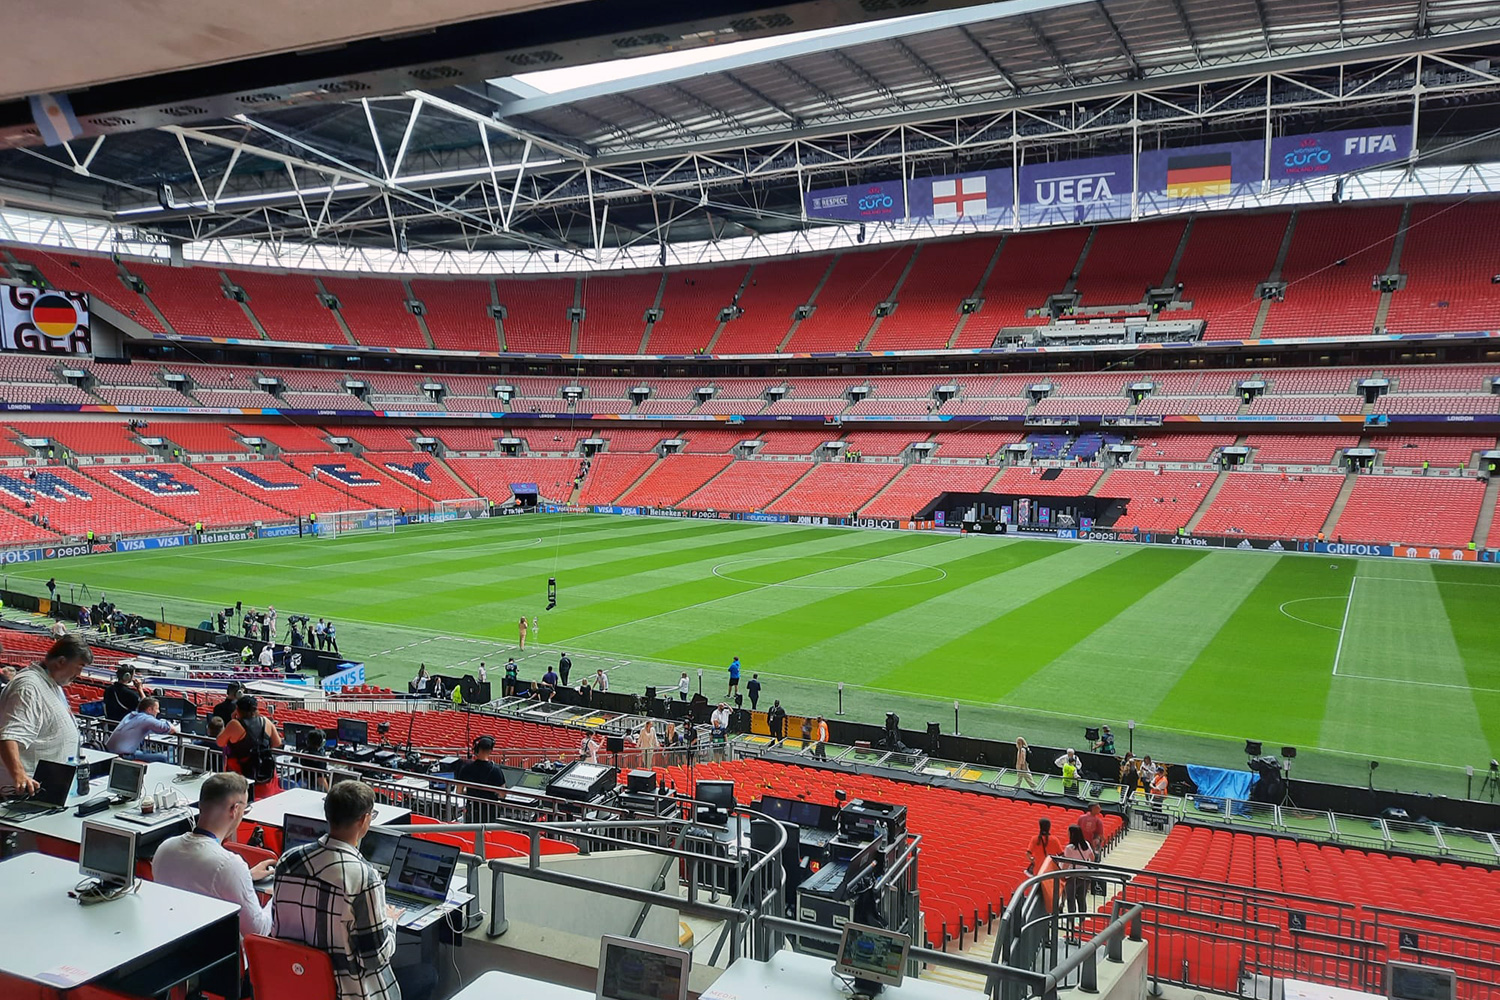 The view form Wembley Stadium's press box. (Richard Laverty)